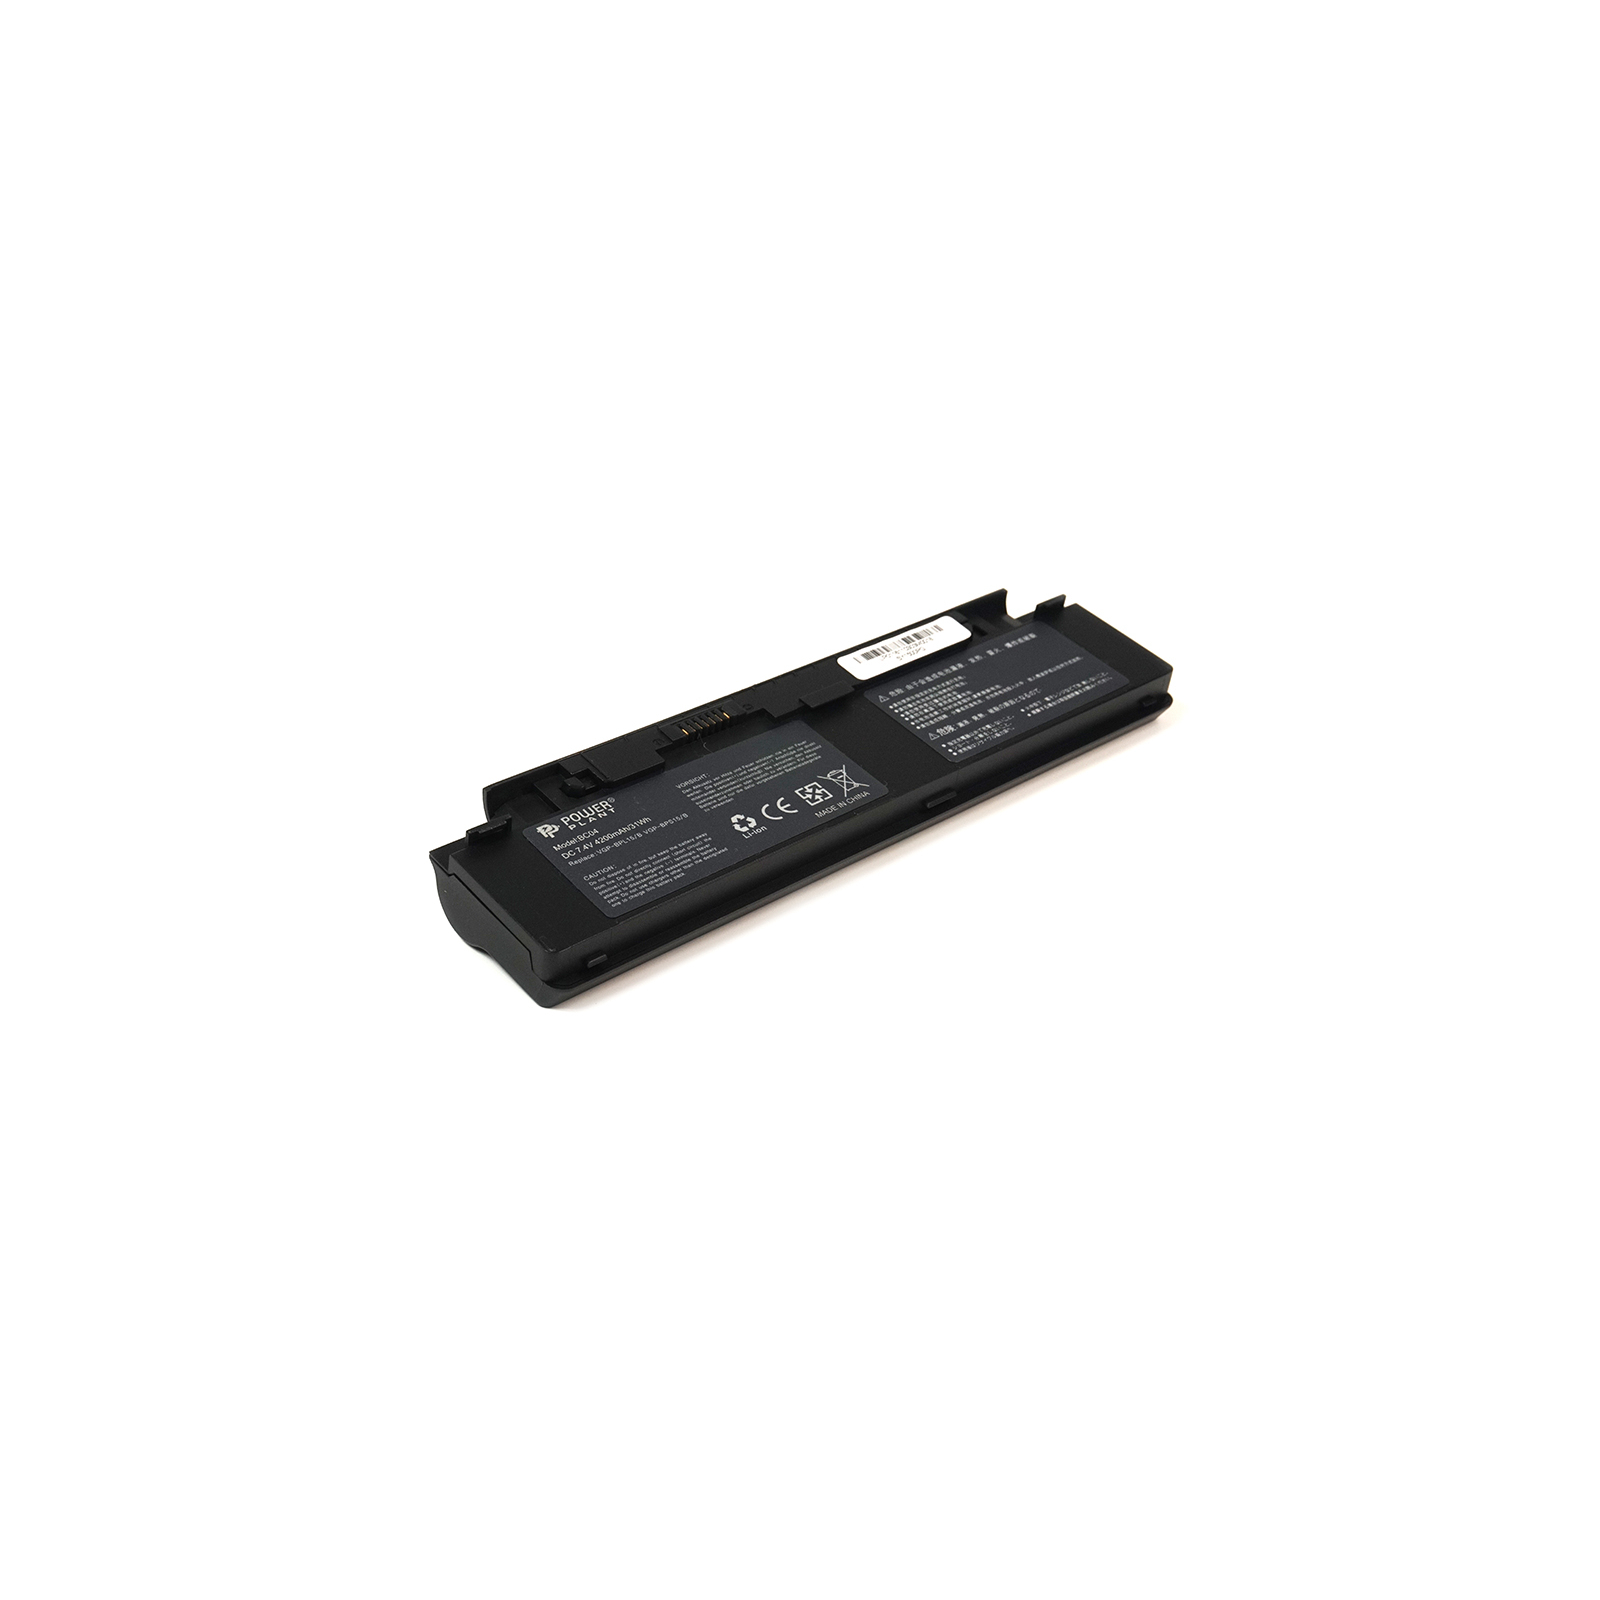 Аккумулятор для ноутбука SONY VAIO VGP-BPL15/B (VGN-P31ZK/R) 7.4V 4200mAh PowerPlant (NB520053) изображение 3